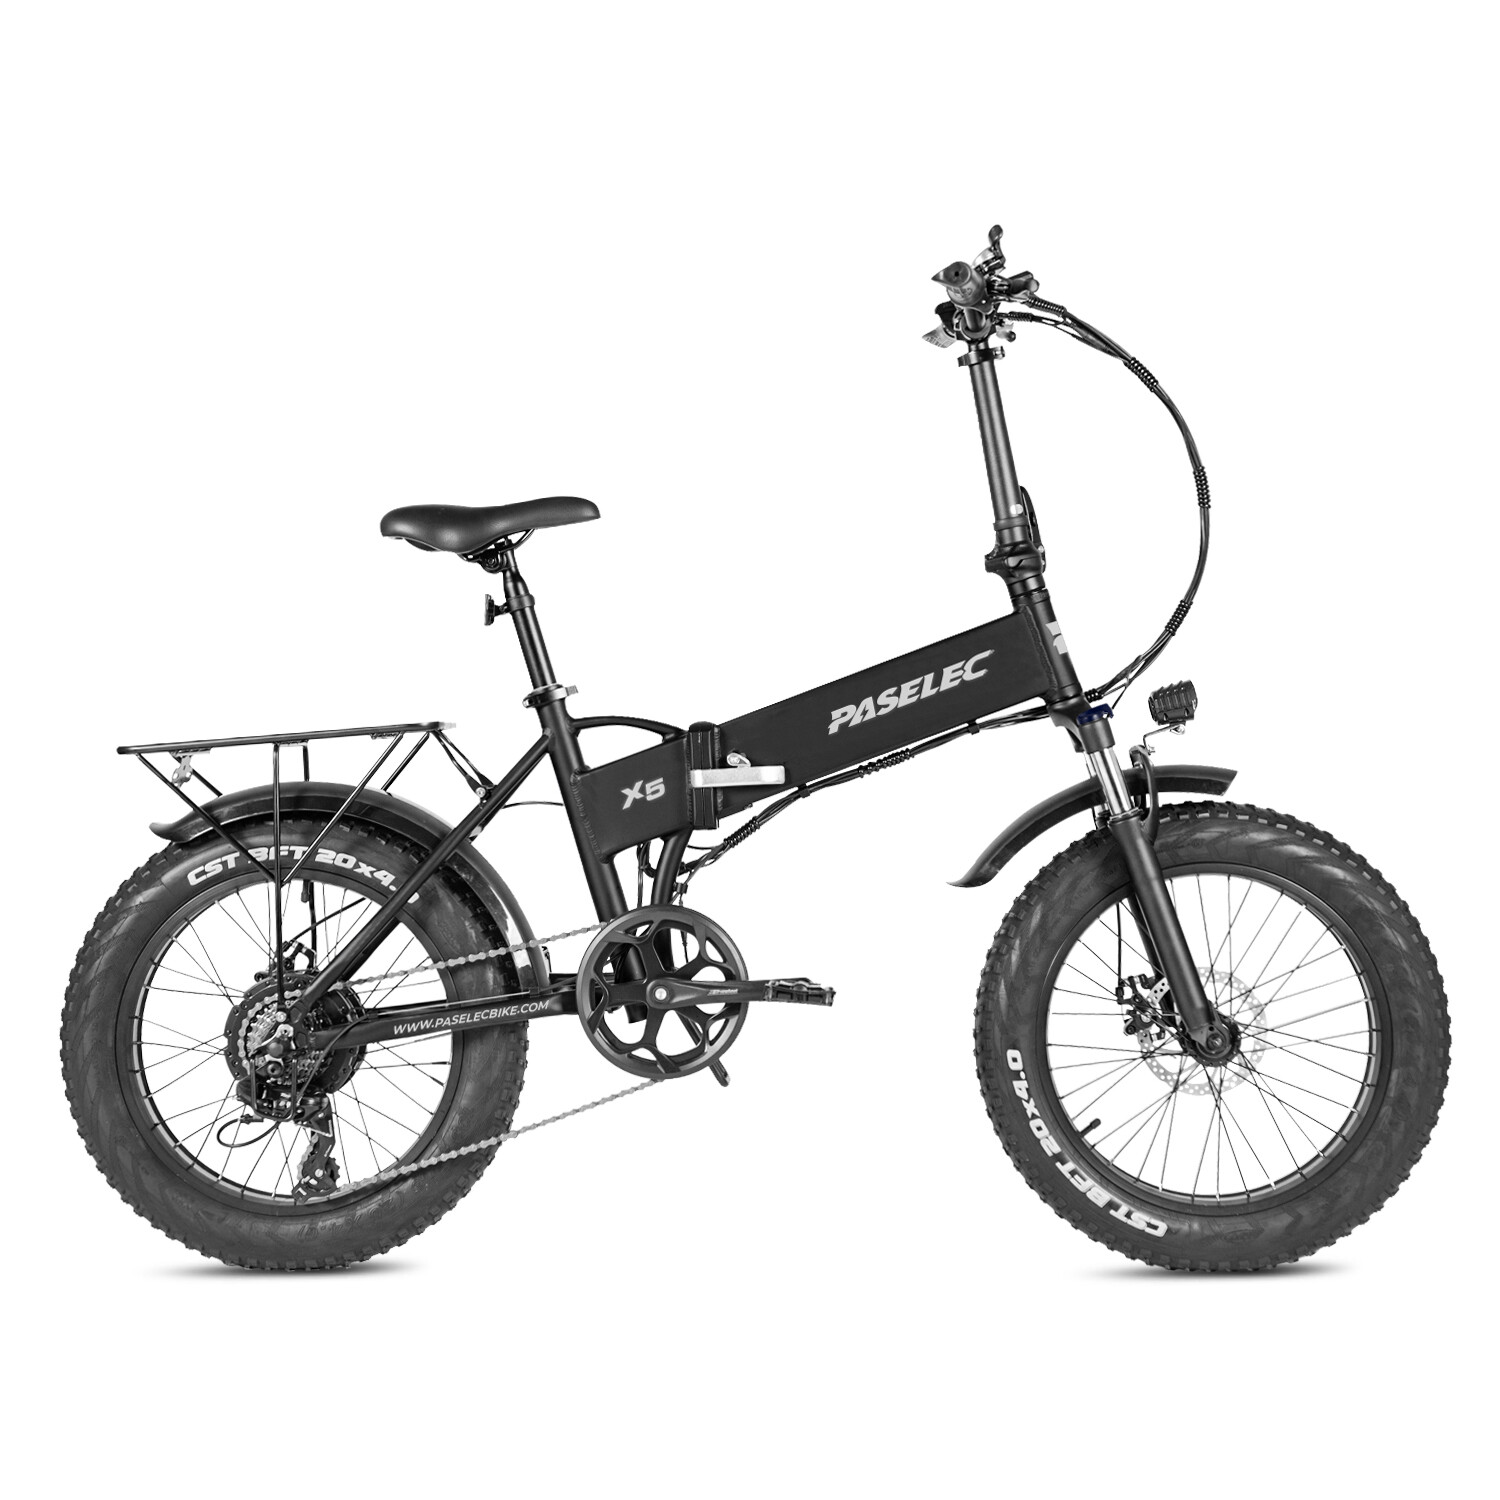 Paselec PX5 electric bicycle